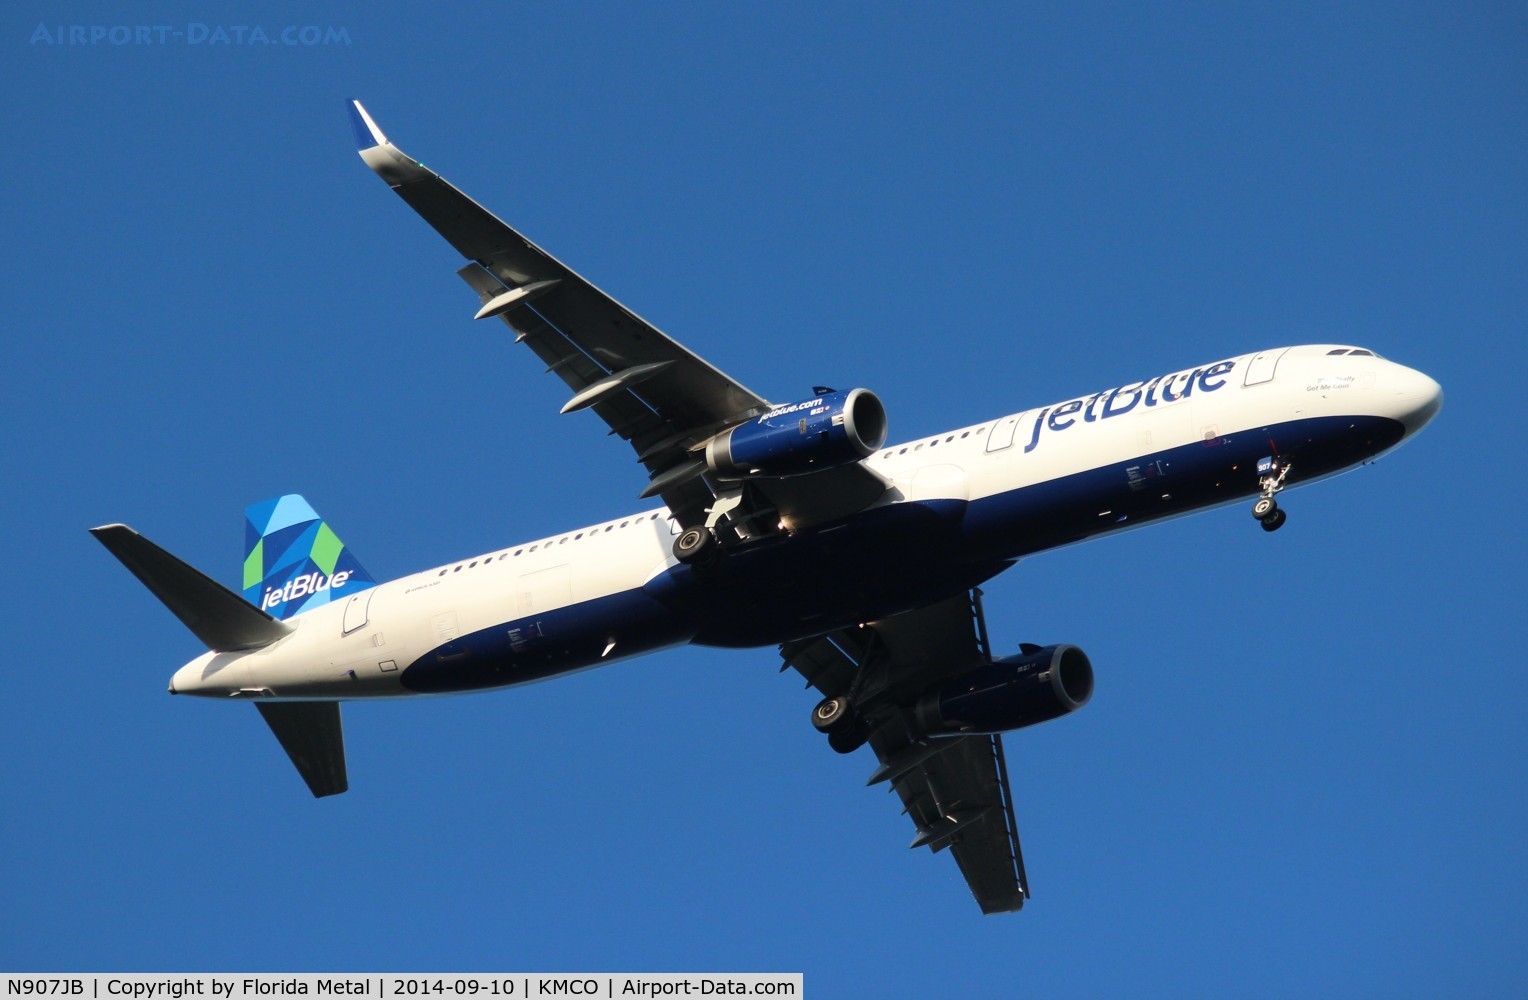 N907JB, 2013 Airbus A321-231 C/N 5865, Jet Blue